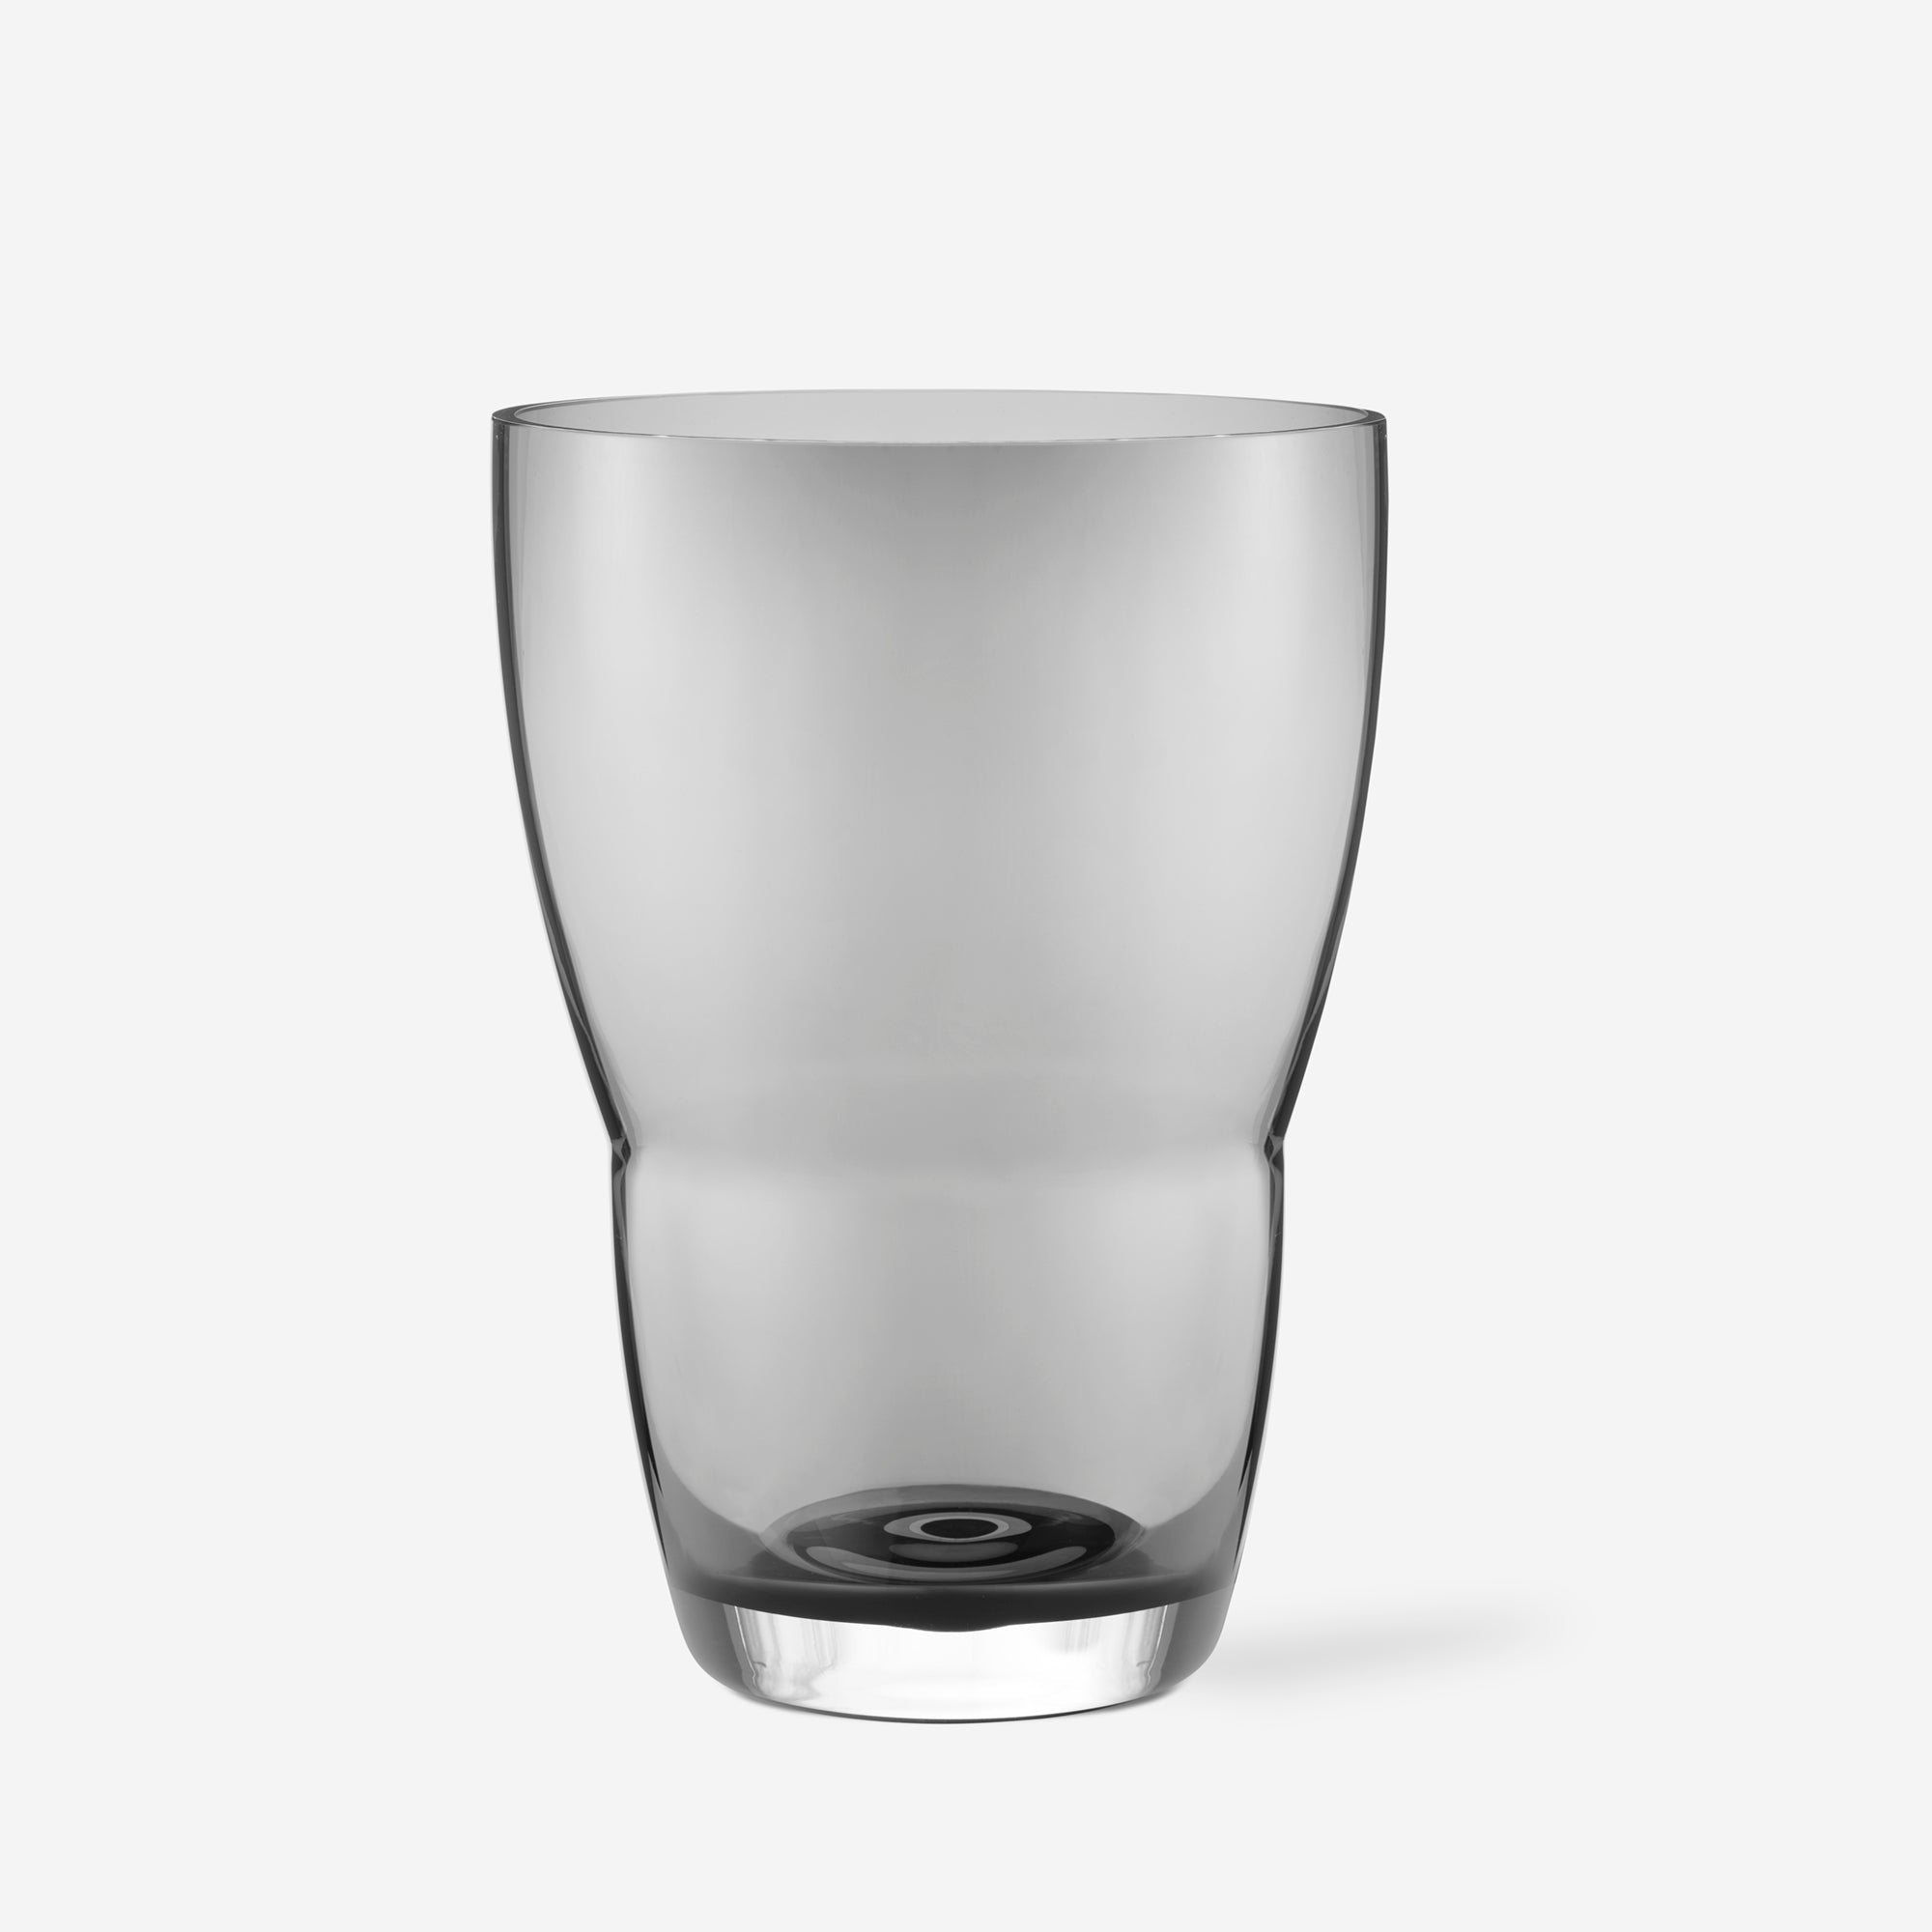 Vipp 248 Glass Vase